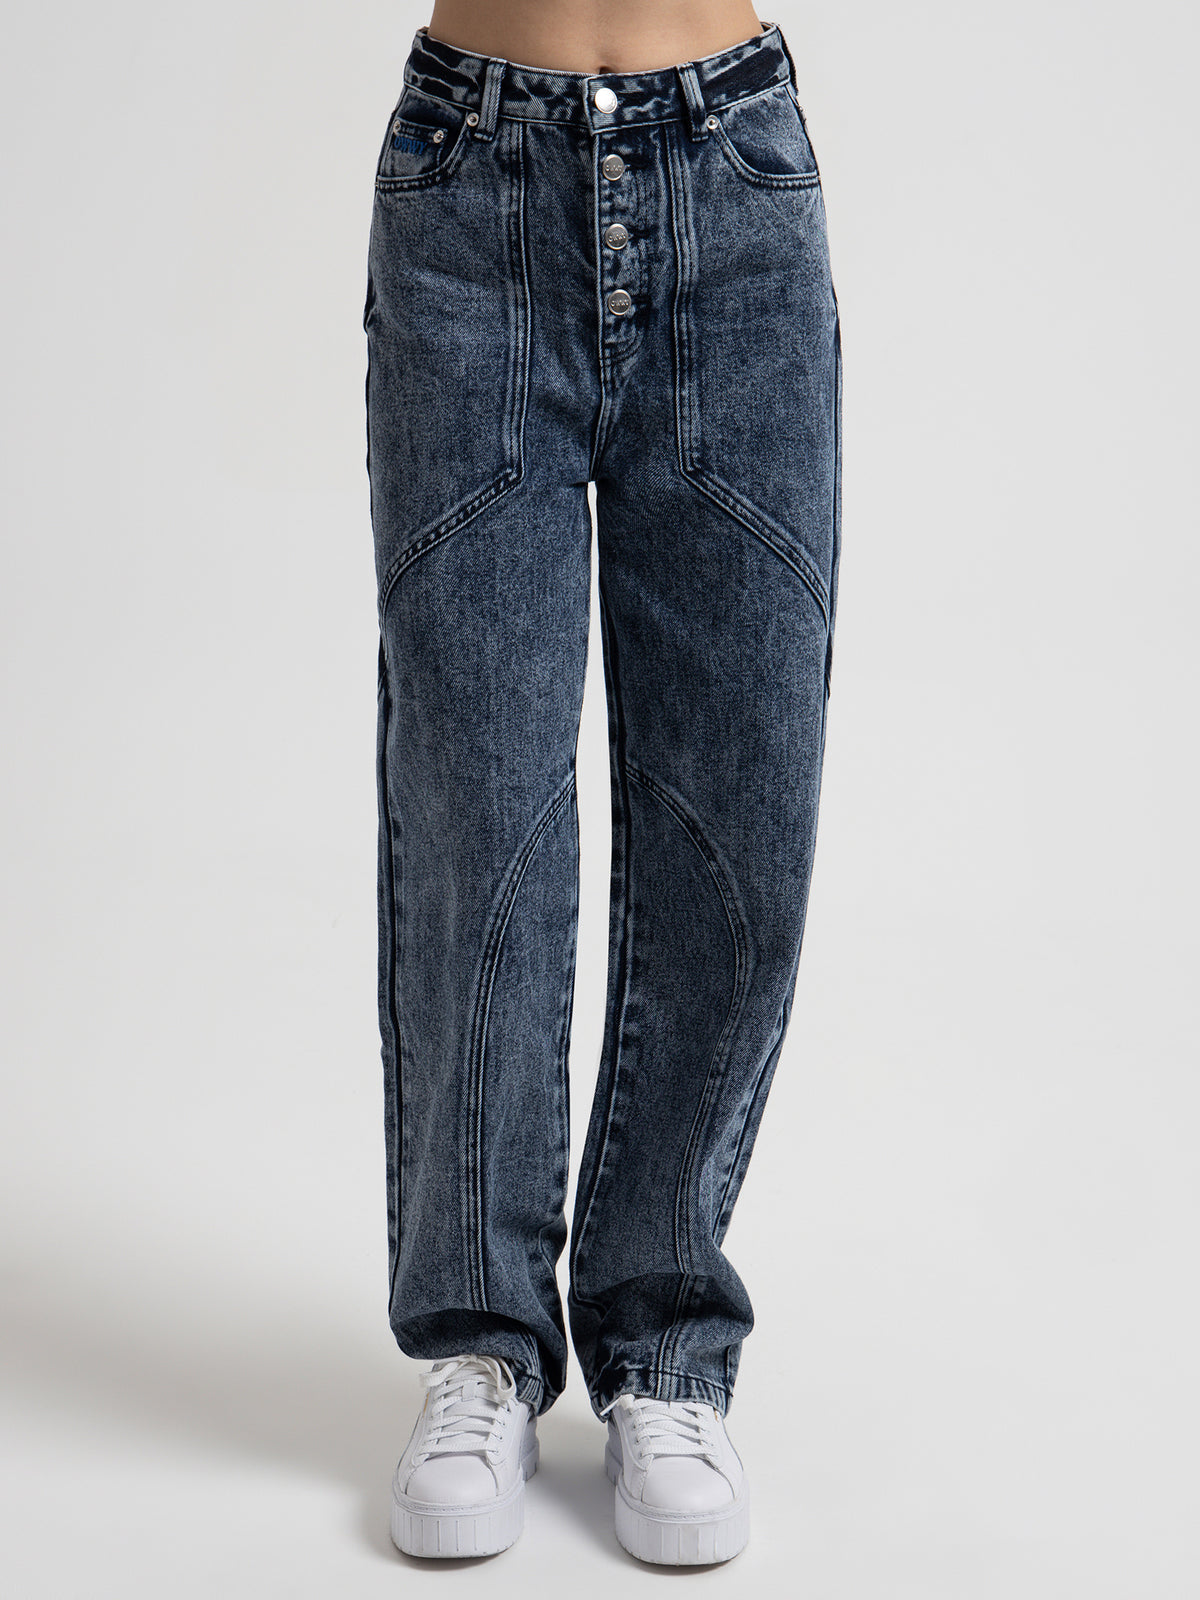 Benton Jeans in Denim